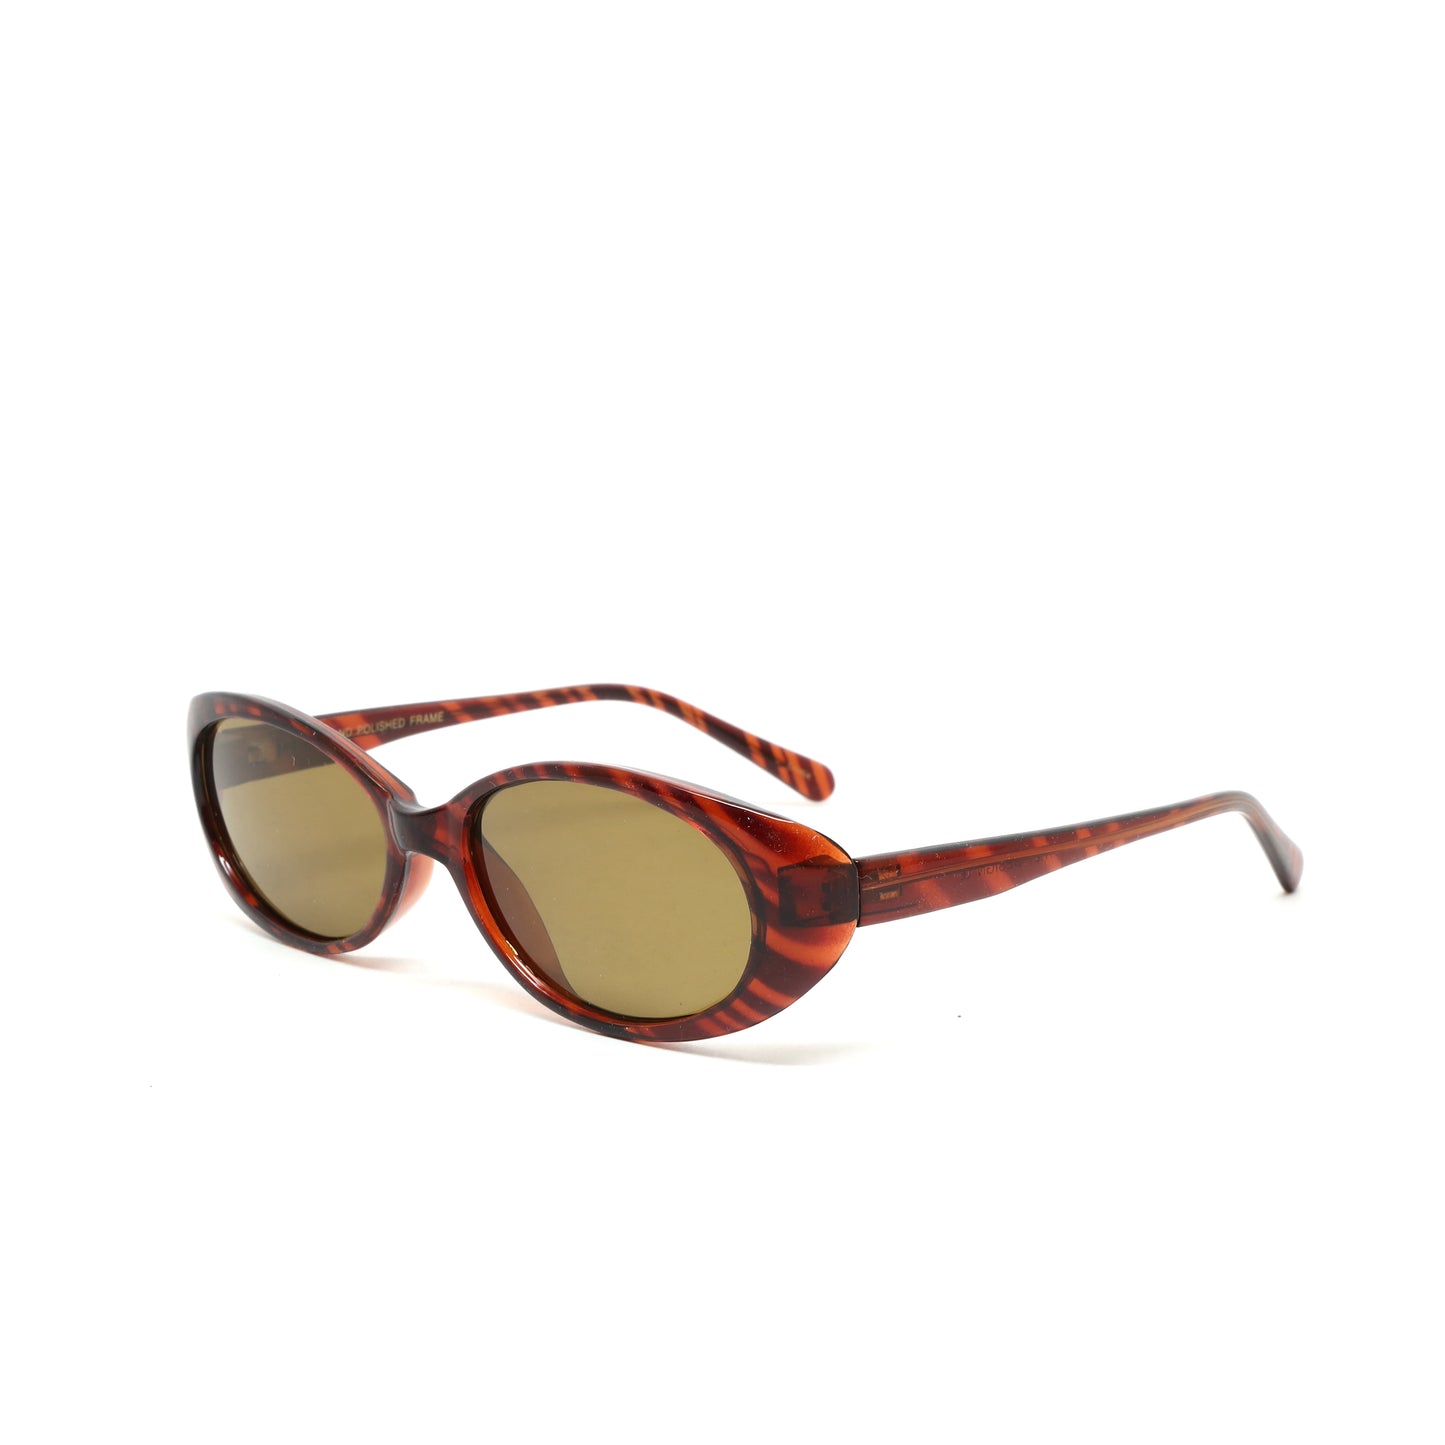 Vintage Standard Size 90s Deadstock Bel Aire Oval Frame Sunglasses - Tortoise/Brown